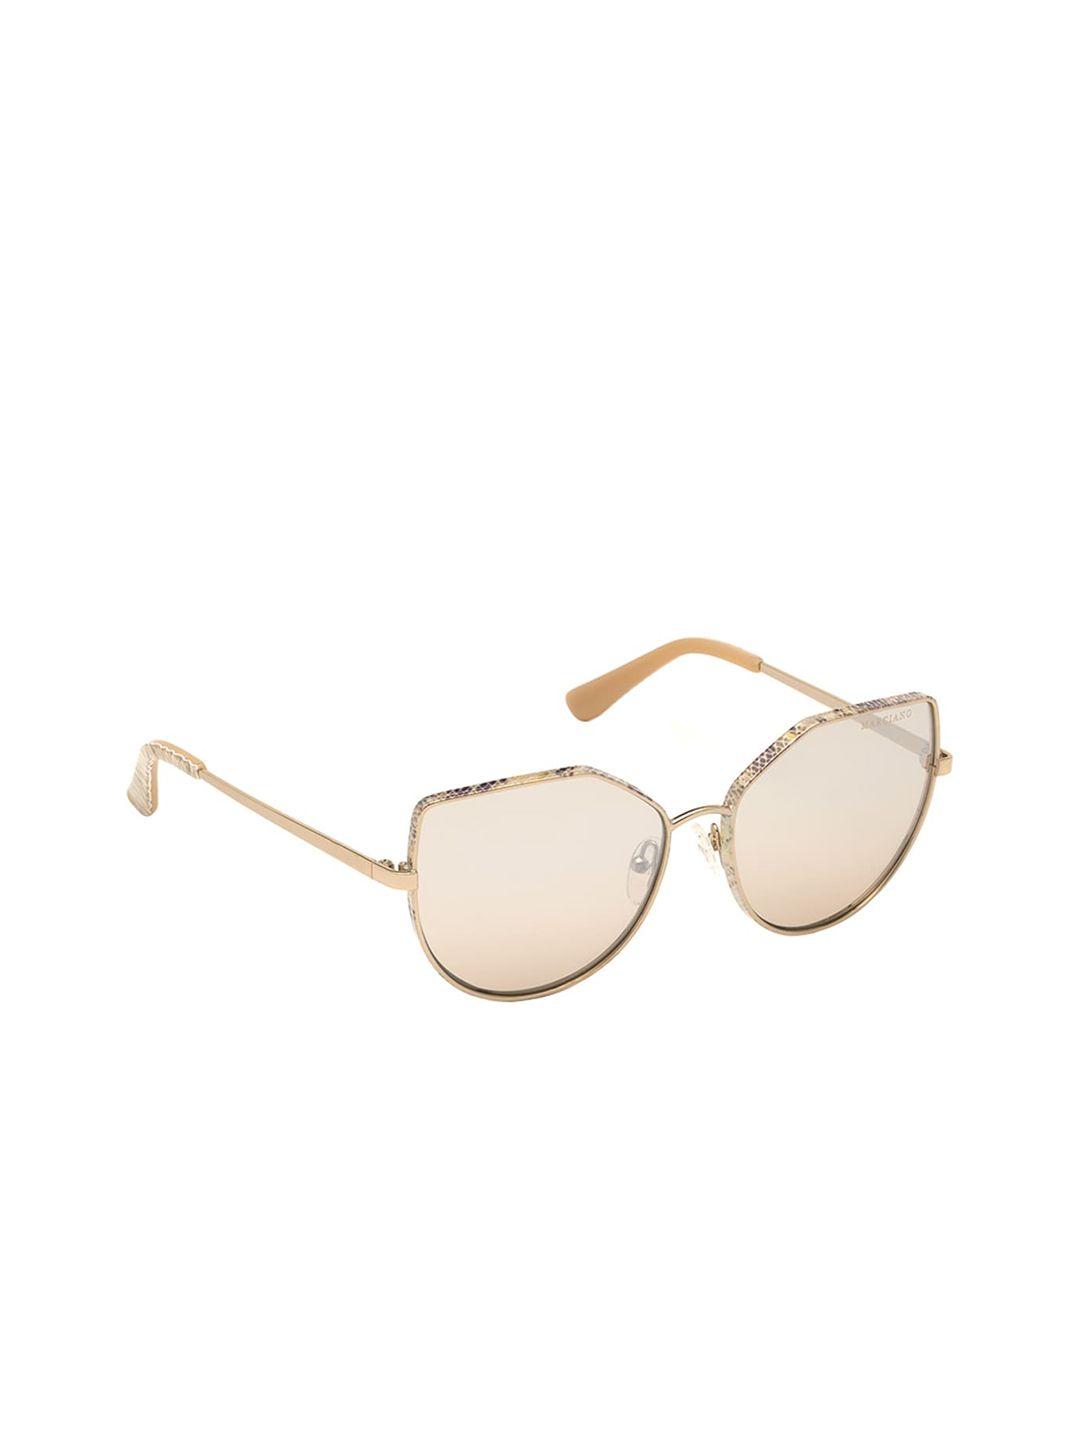 guess-women-cateye-sunglasses-gm0801-57-32f